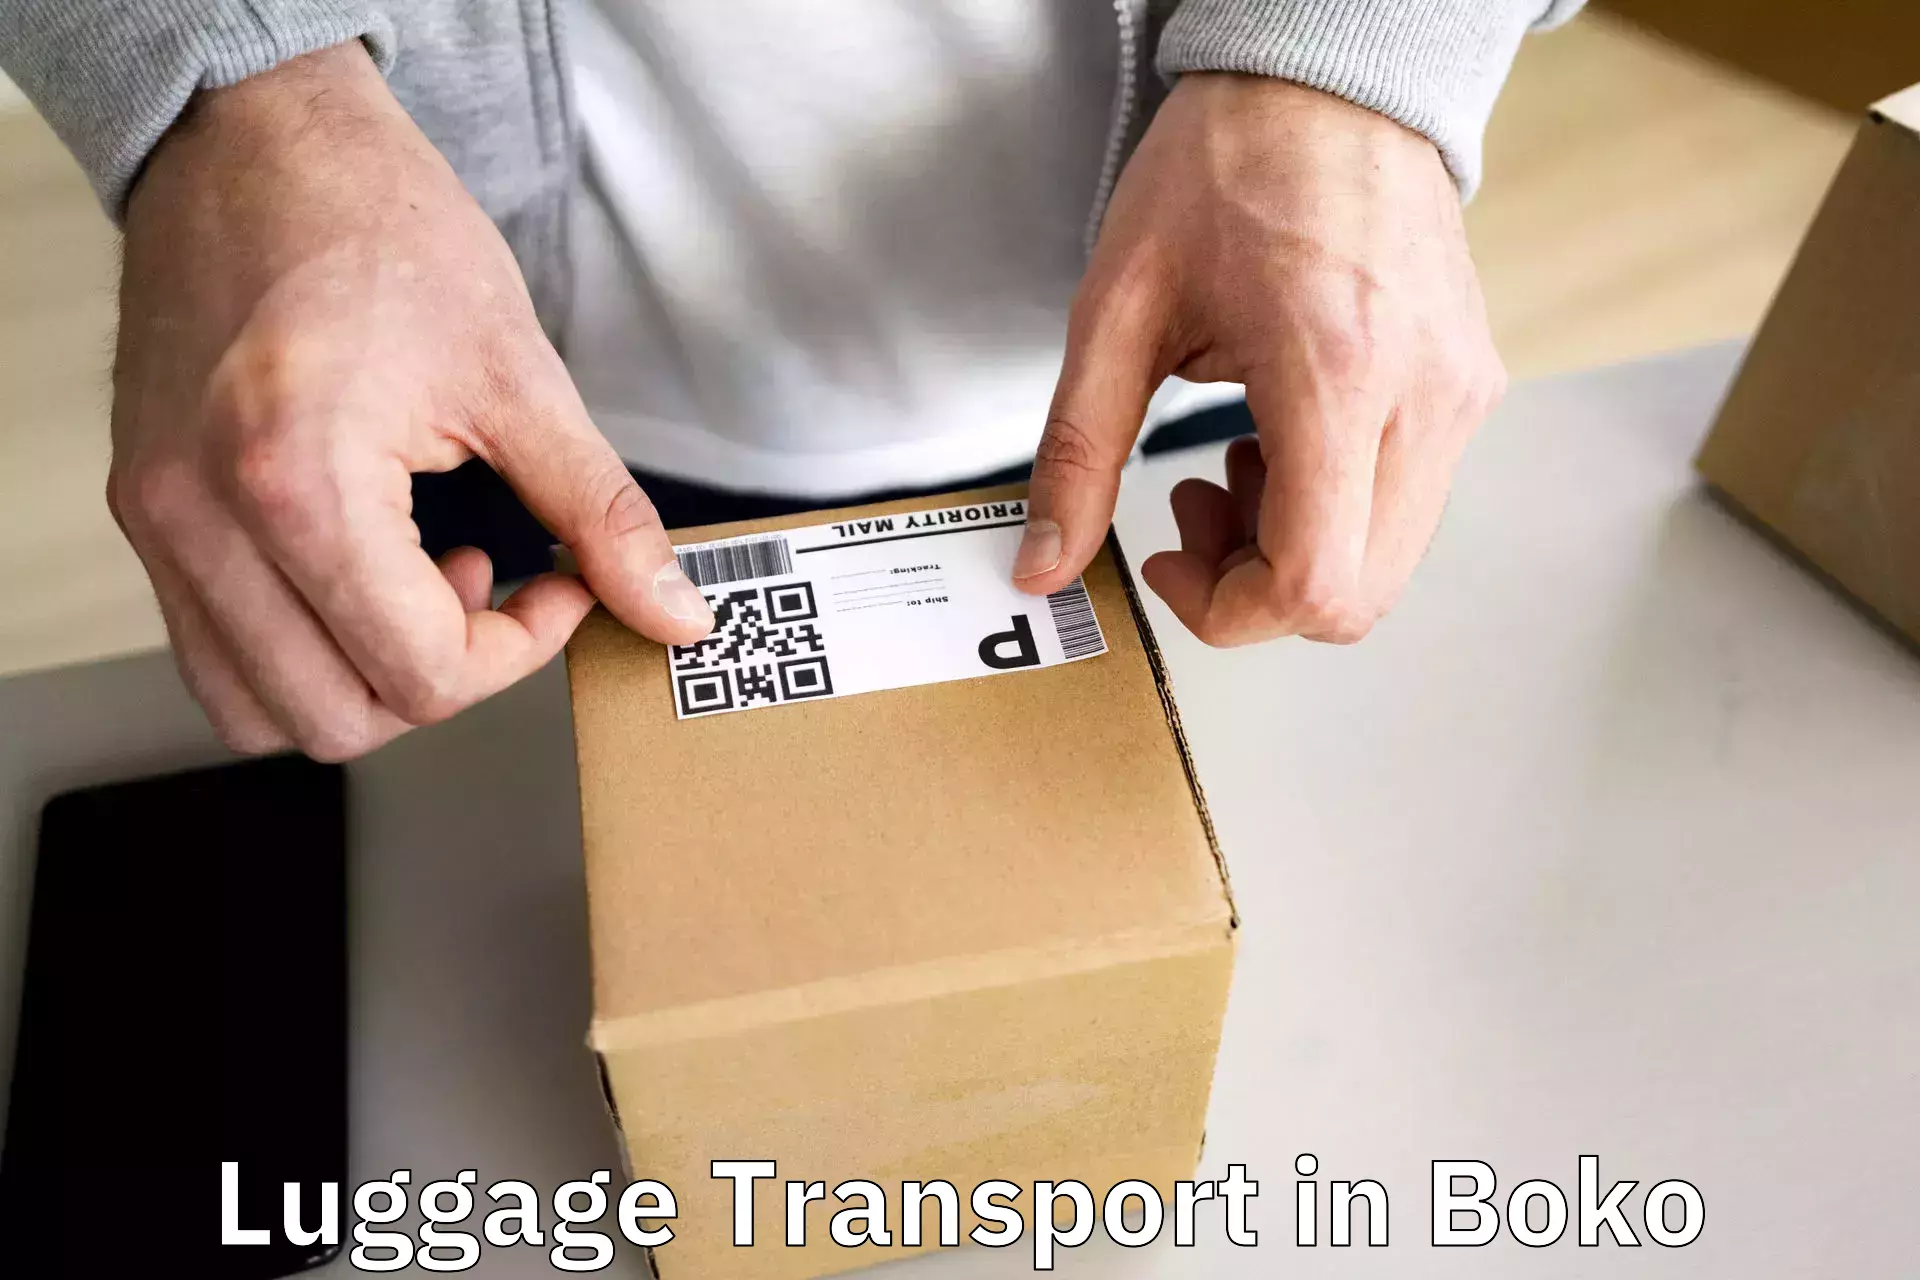 Baggage transport innovation in Boko